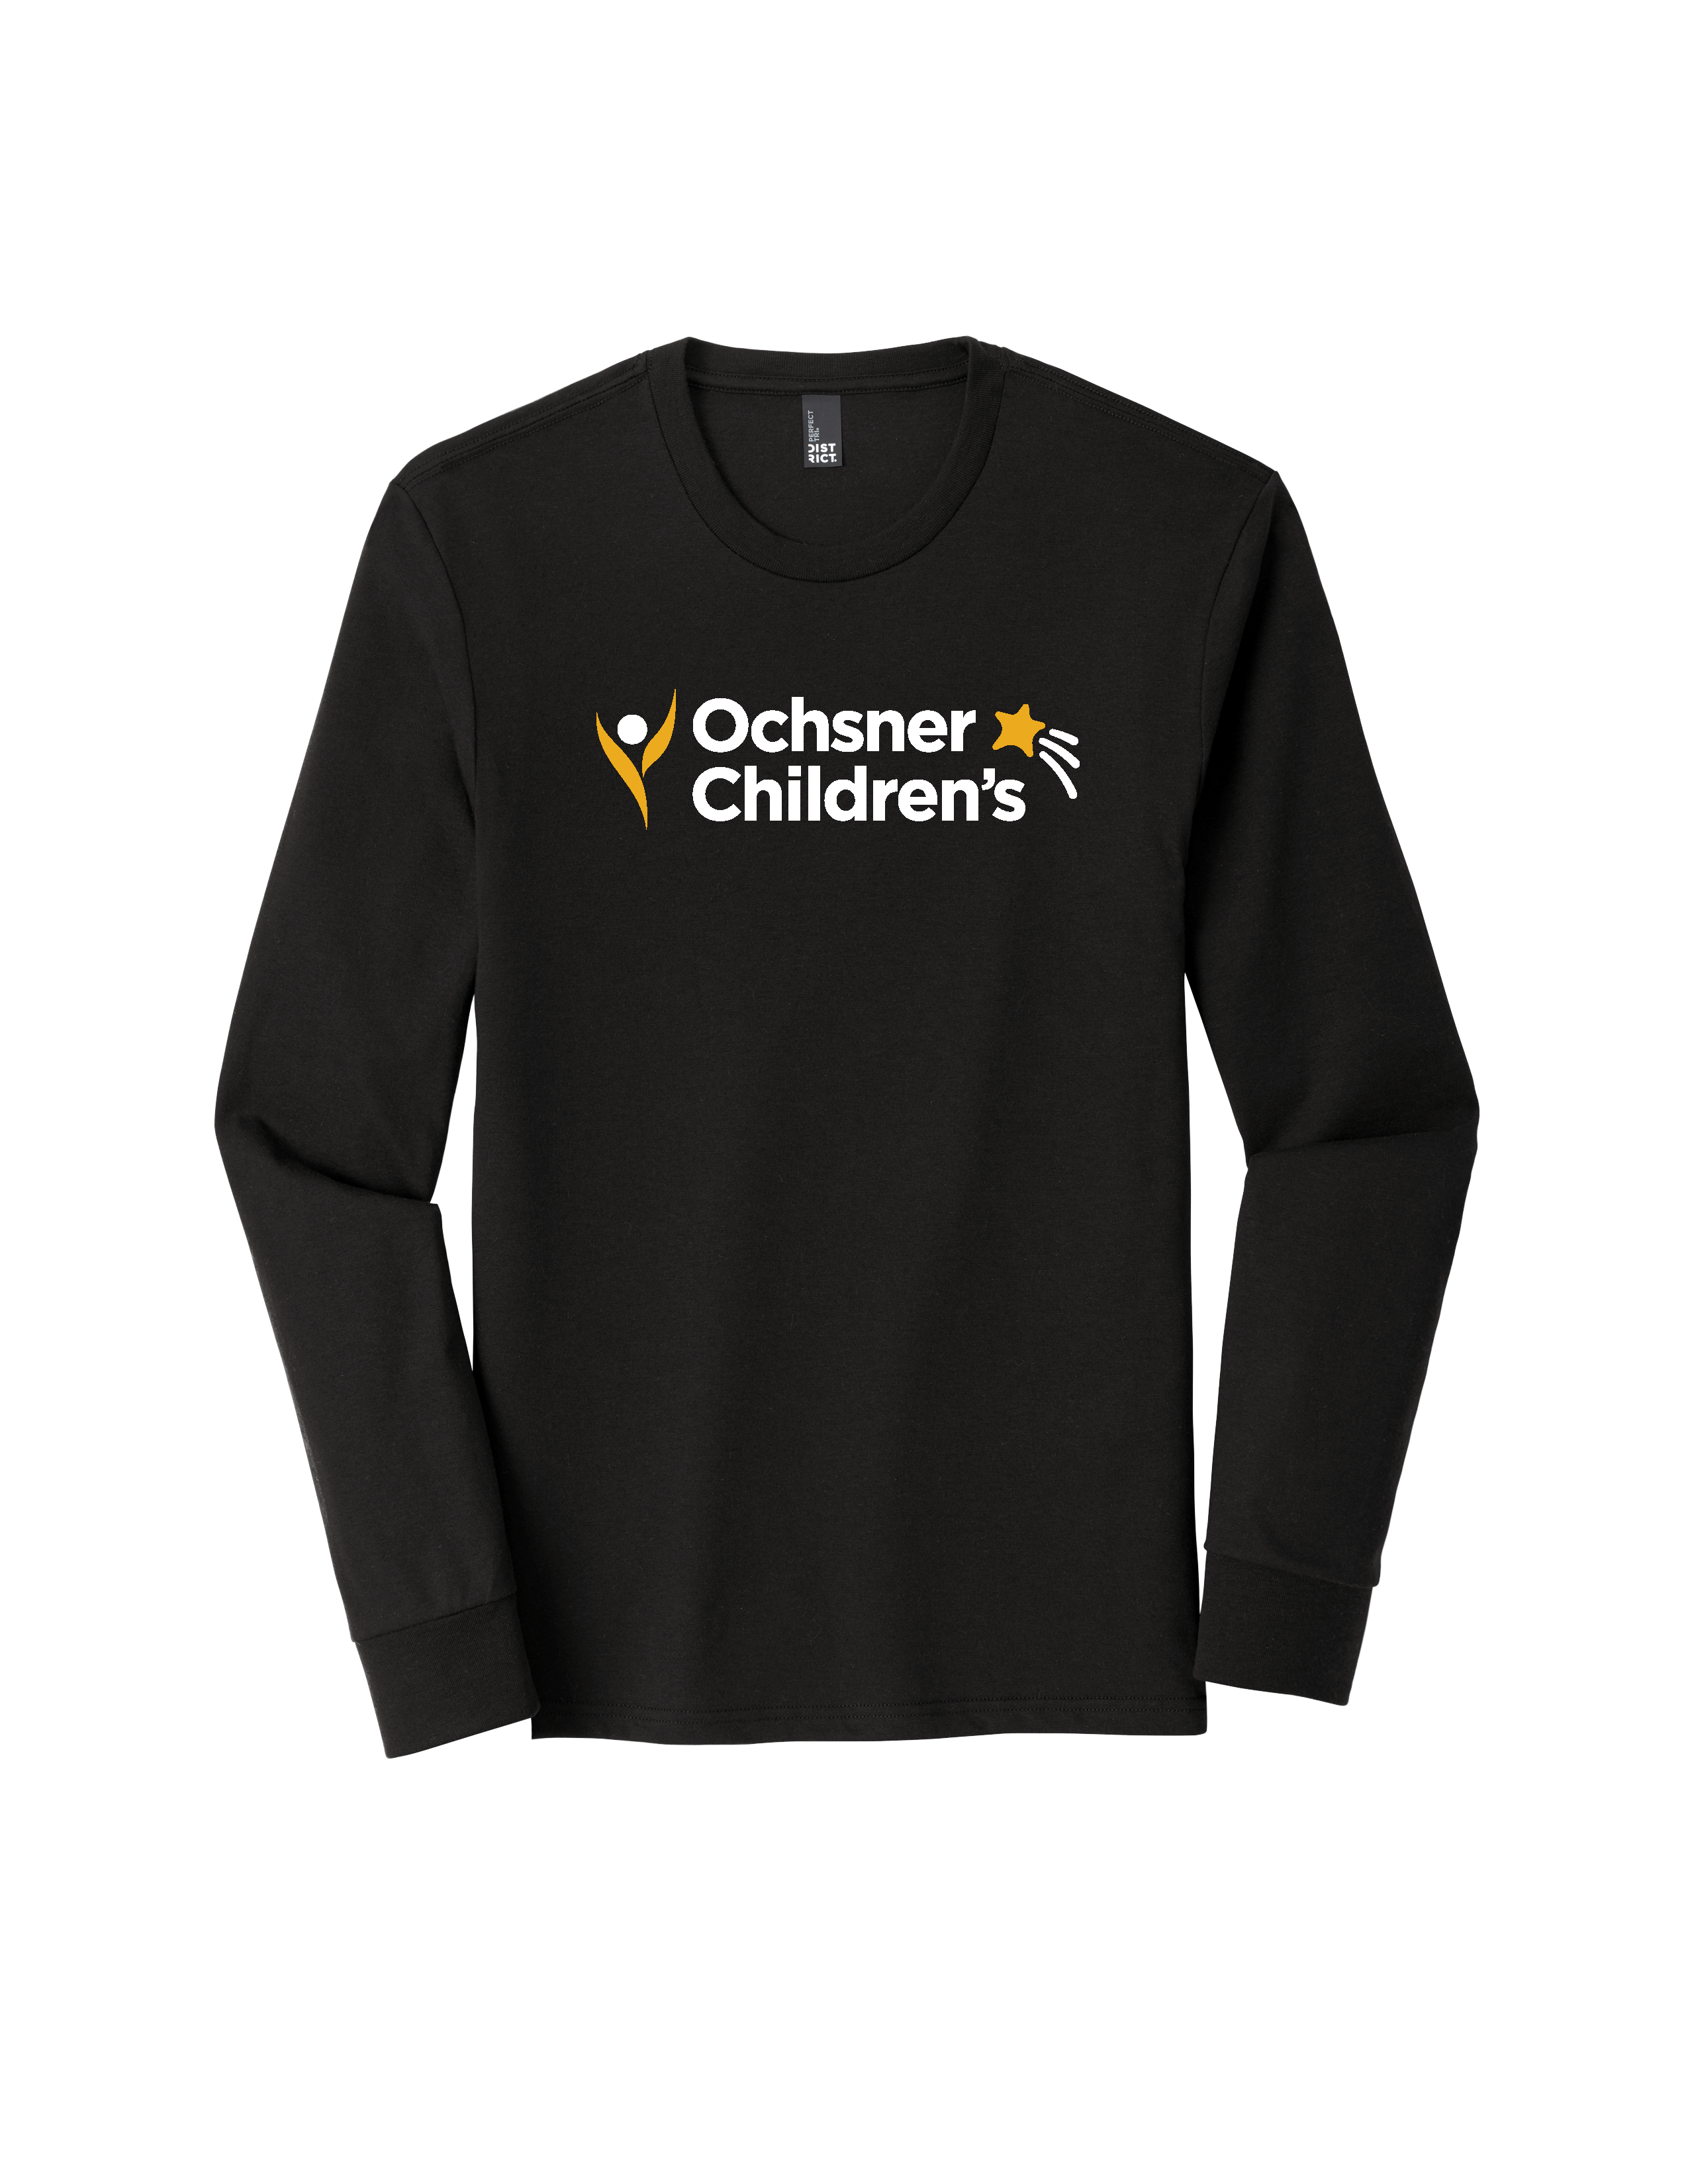 Ochsner Children's Long Sleeve Unisex T-Shirt, Black, large image number 1